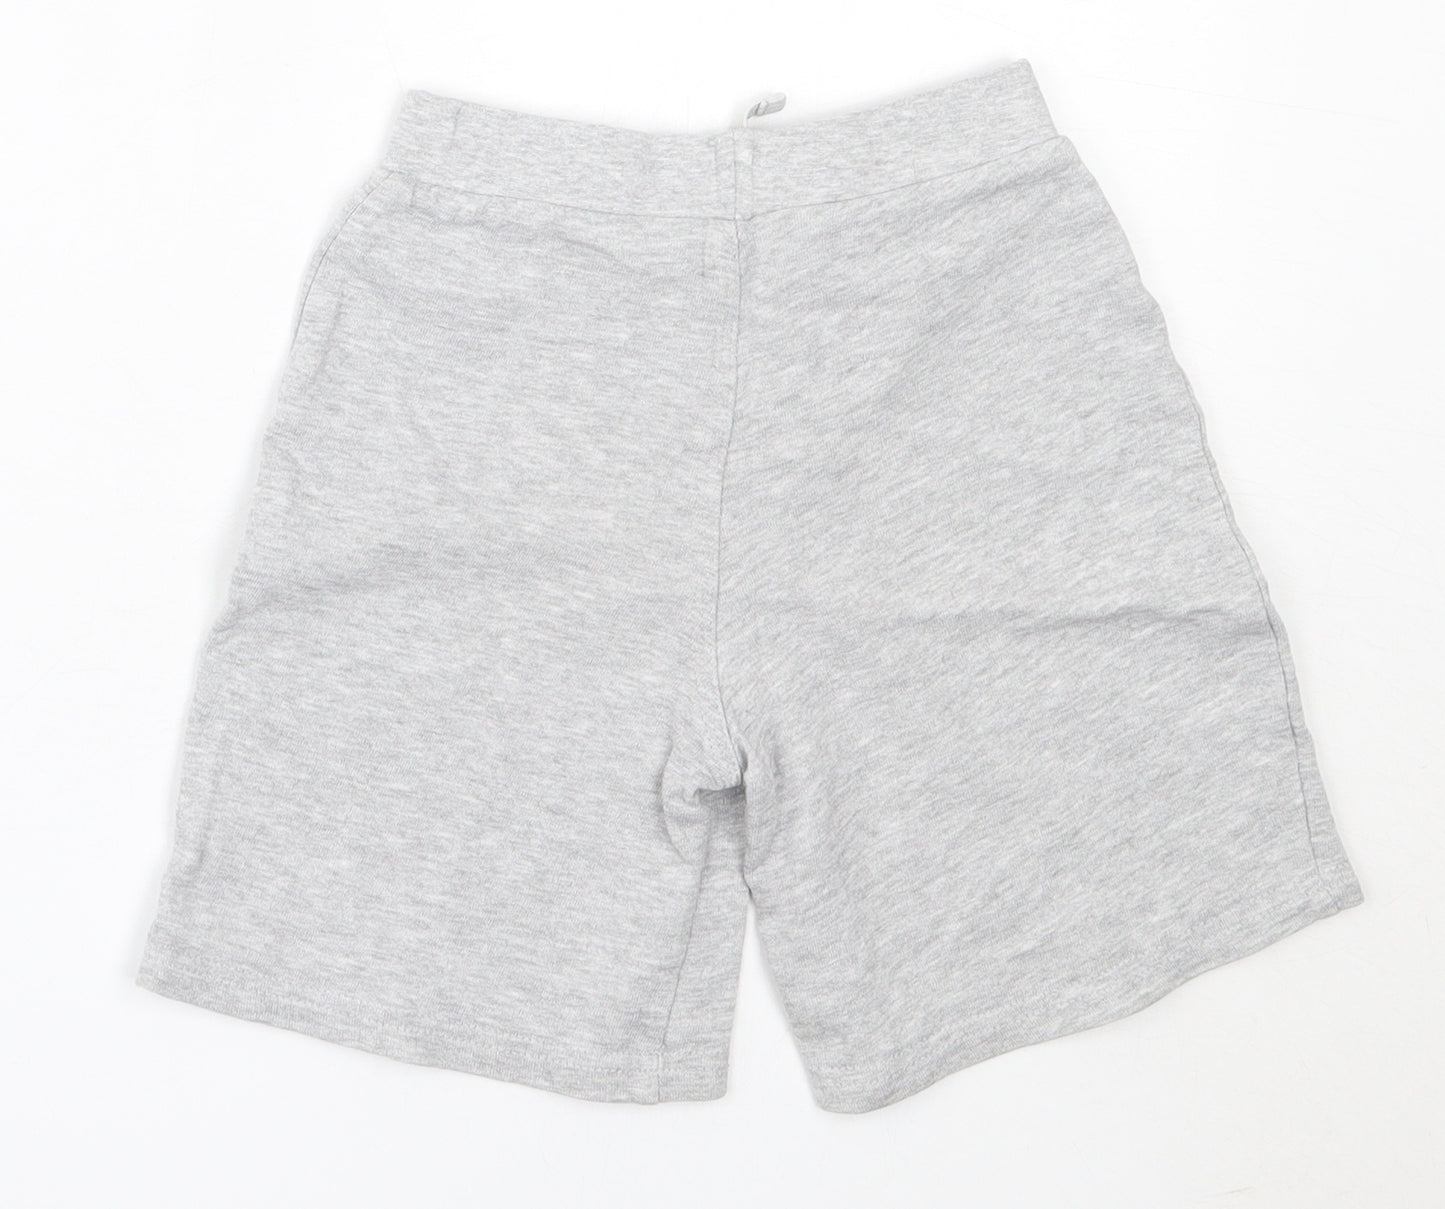 George Boys Grey  Cotton Sweat Shorts Size 4-5 Years  Regular